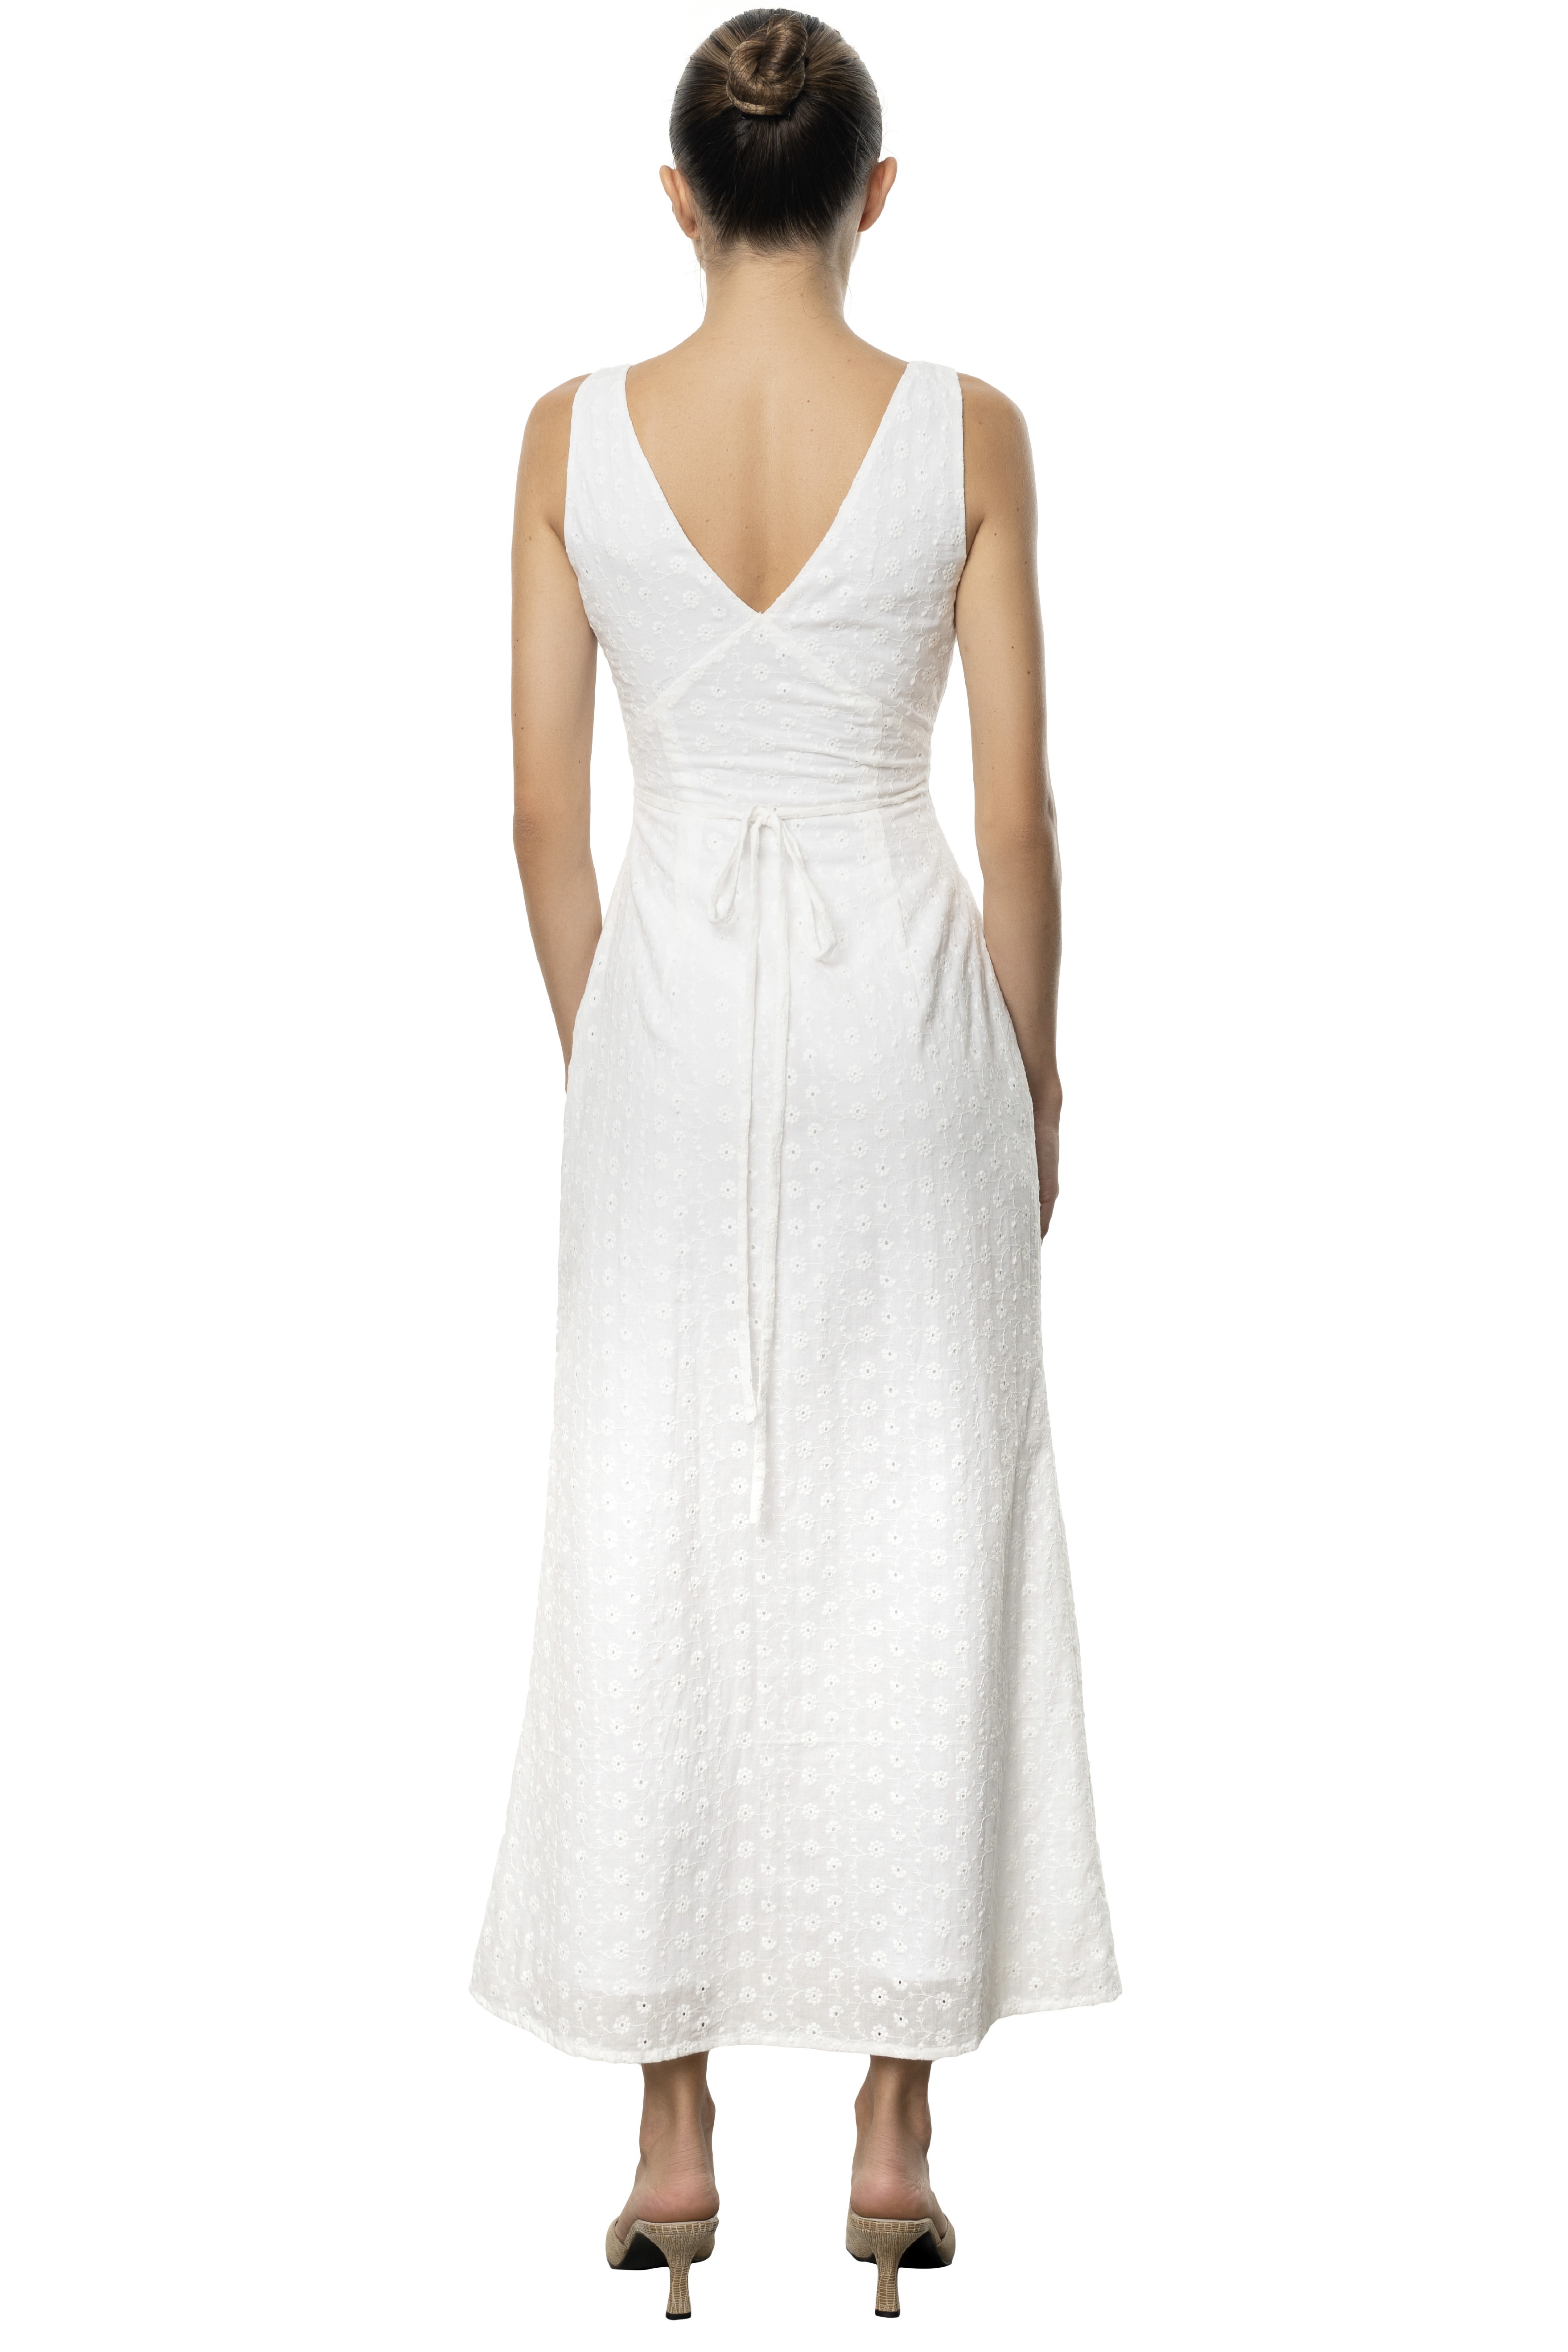 CAROL DRESS - WHITE 